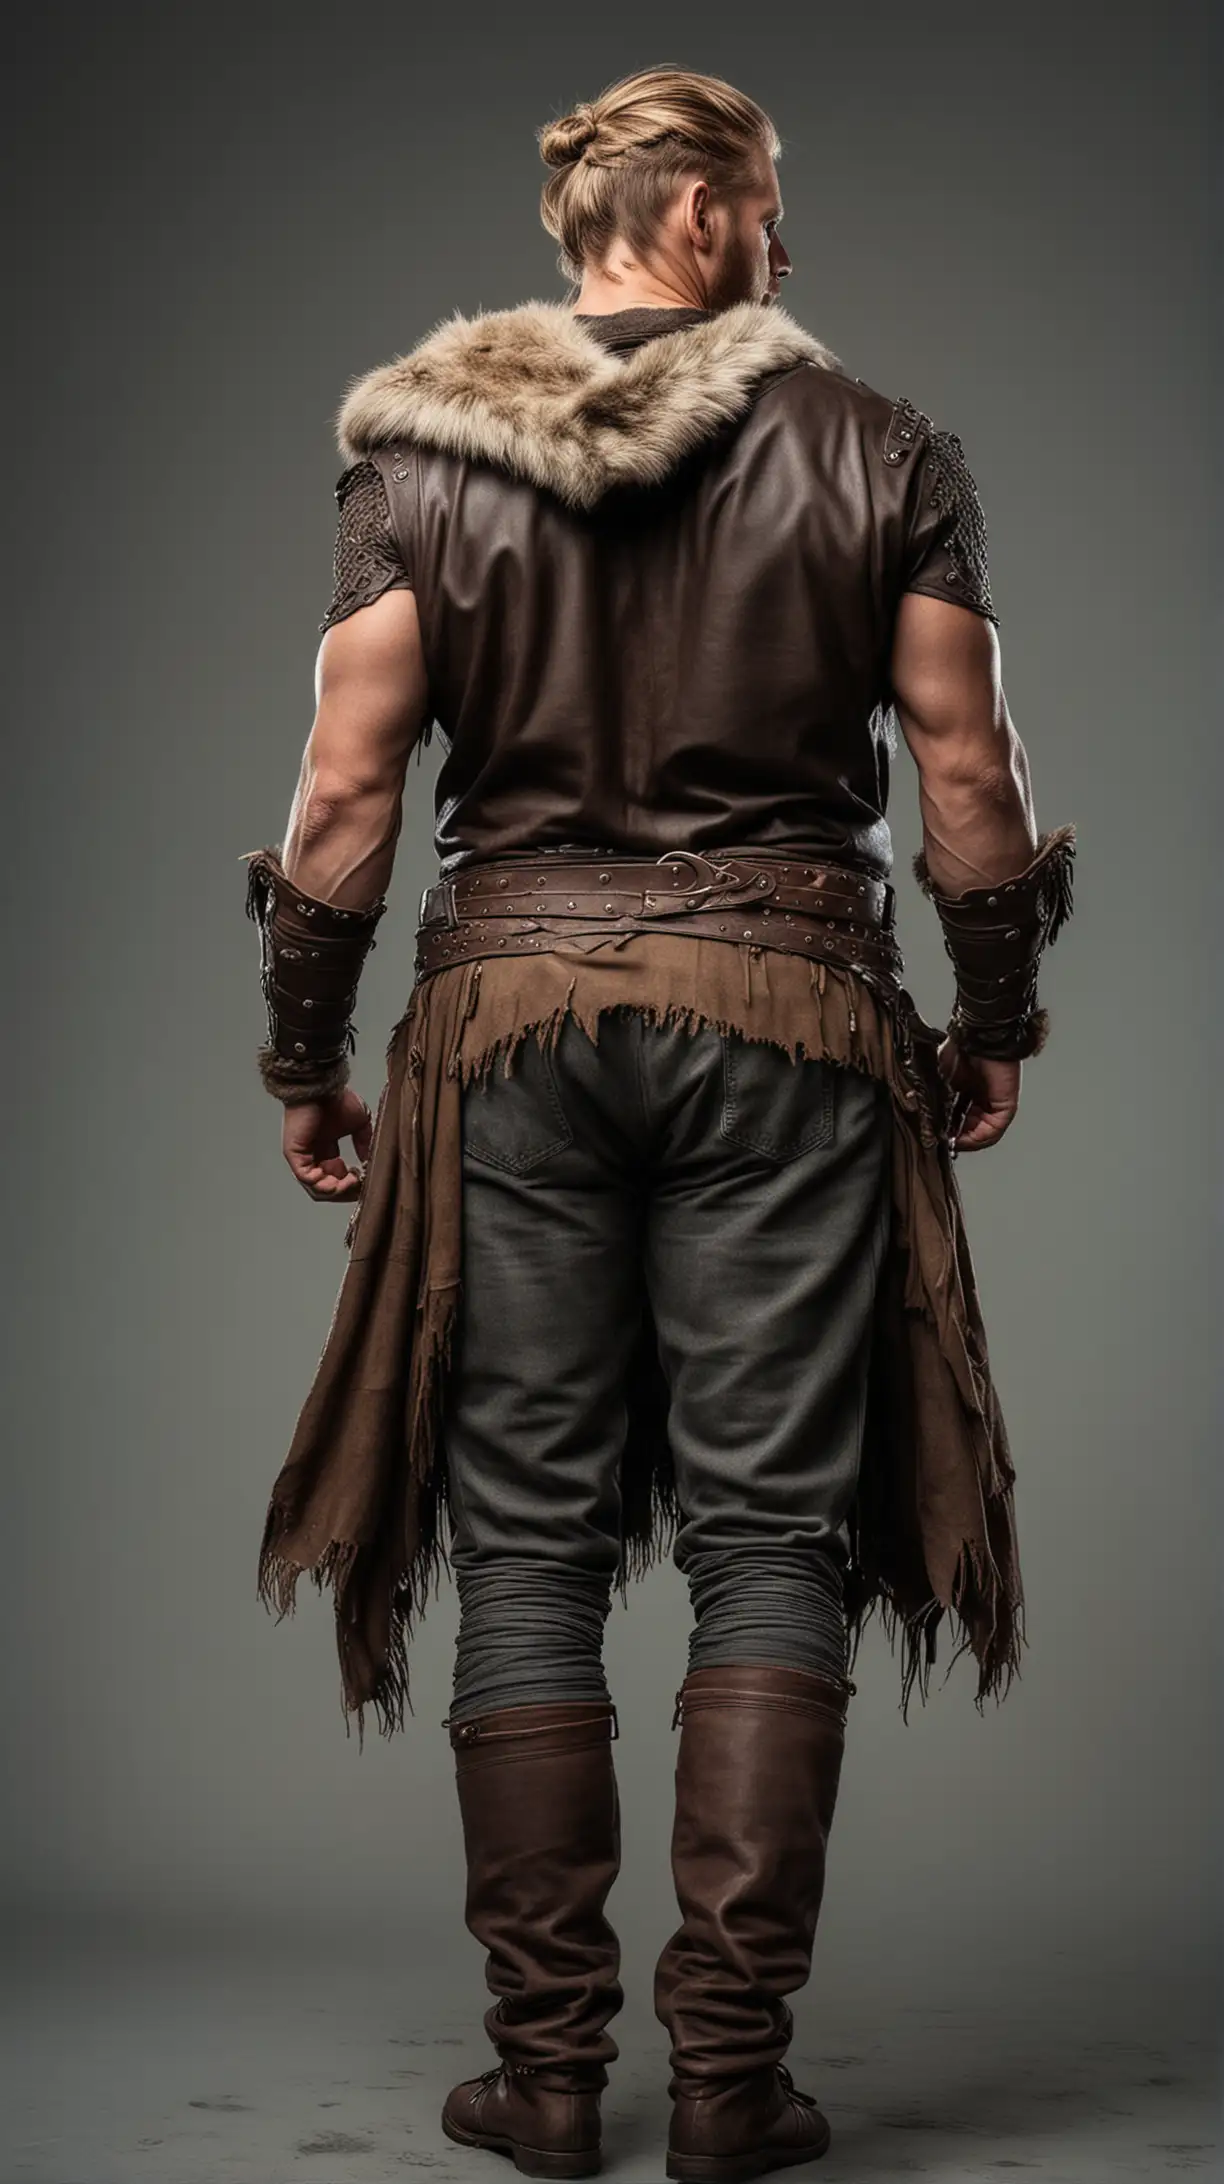 Muscular Viking Warrior with Fur Shawl and Viking Gear